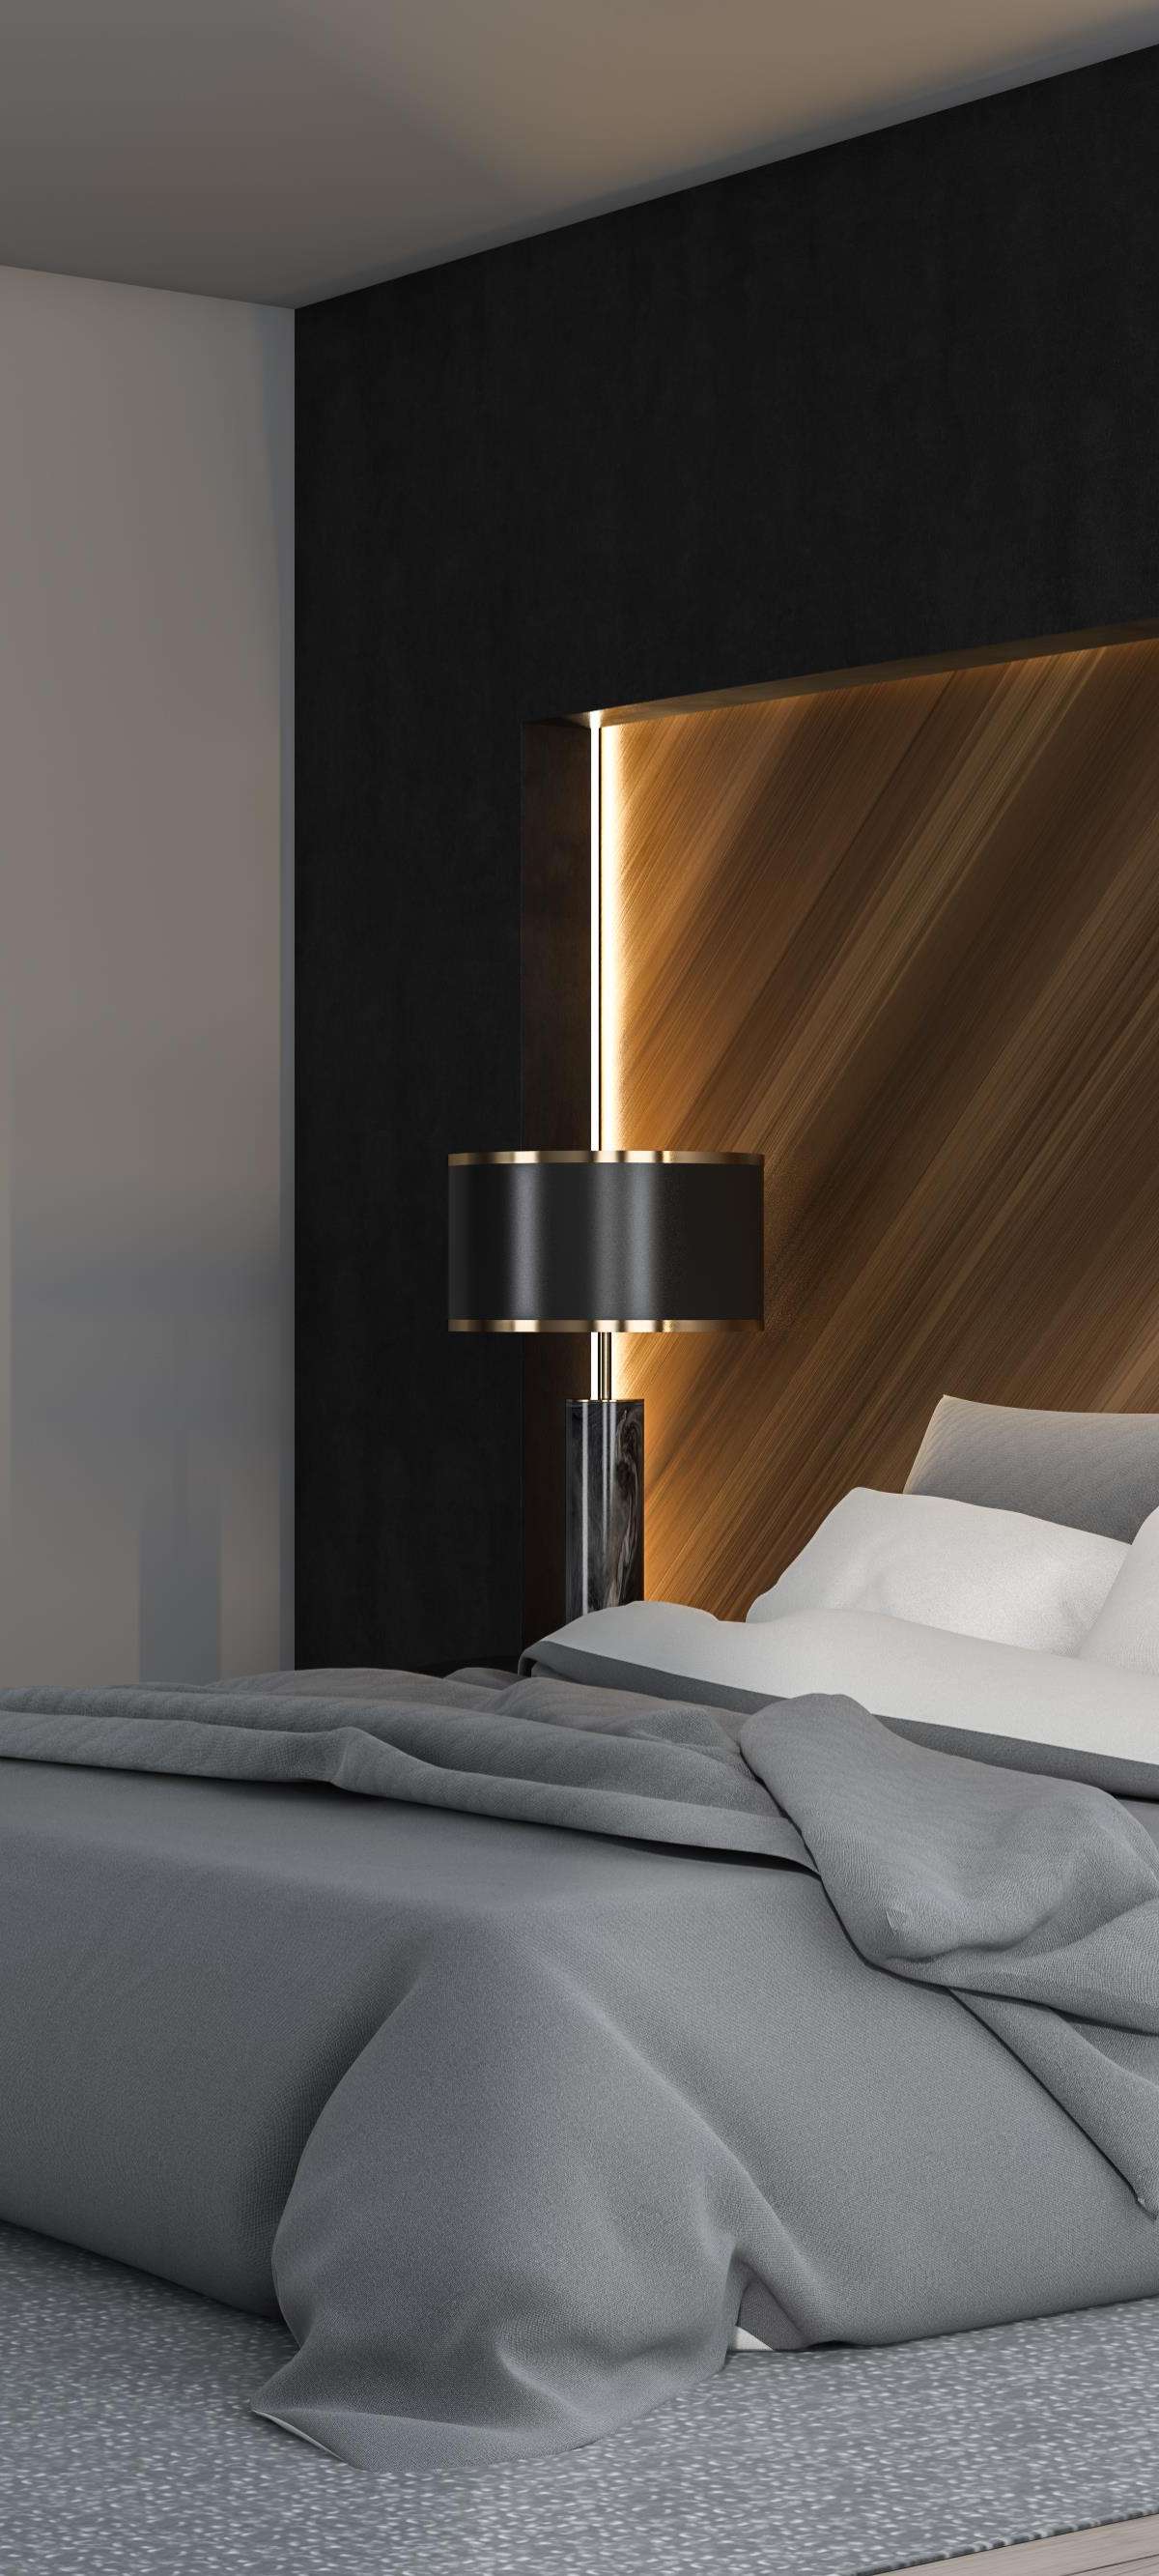 Stylish Minimalistic Master Bedroom Design